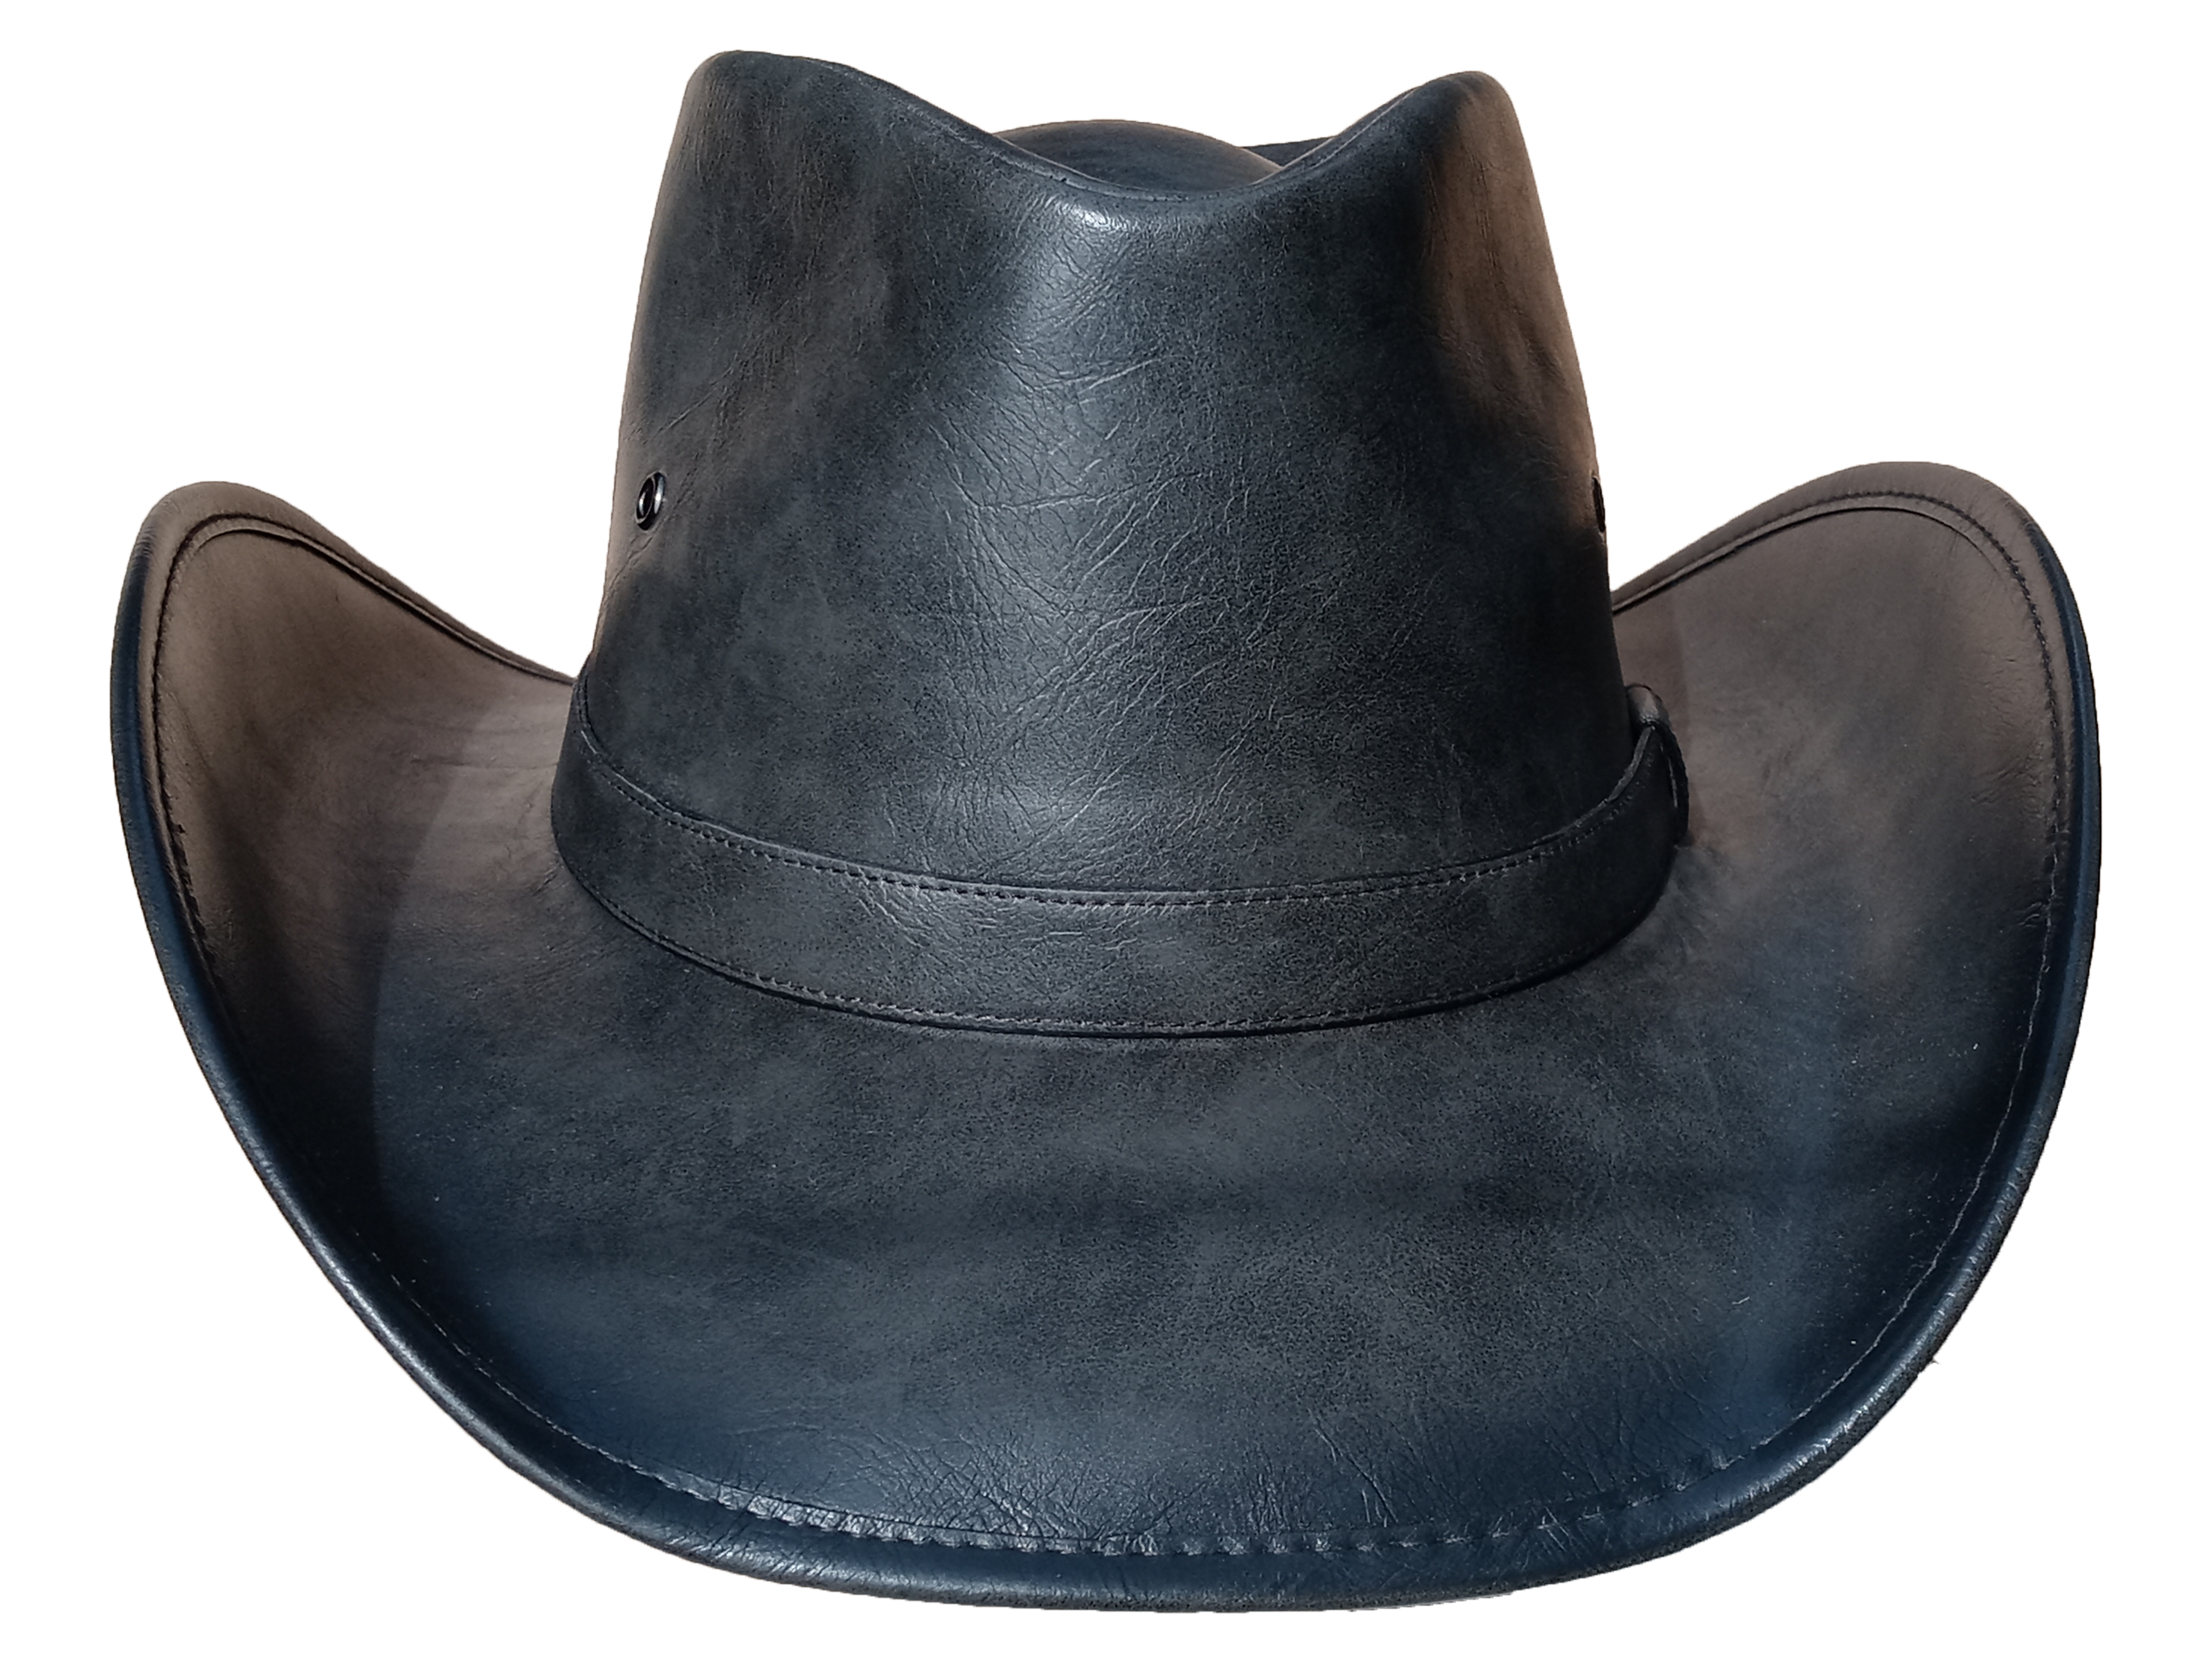 Western Leather Hat Band - El Cielo, Black Leather